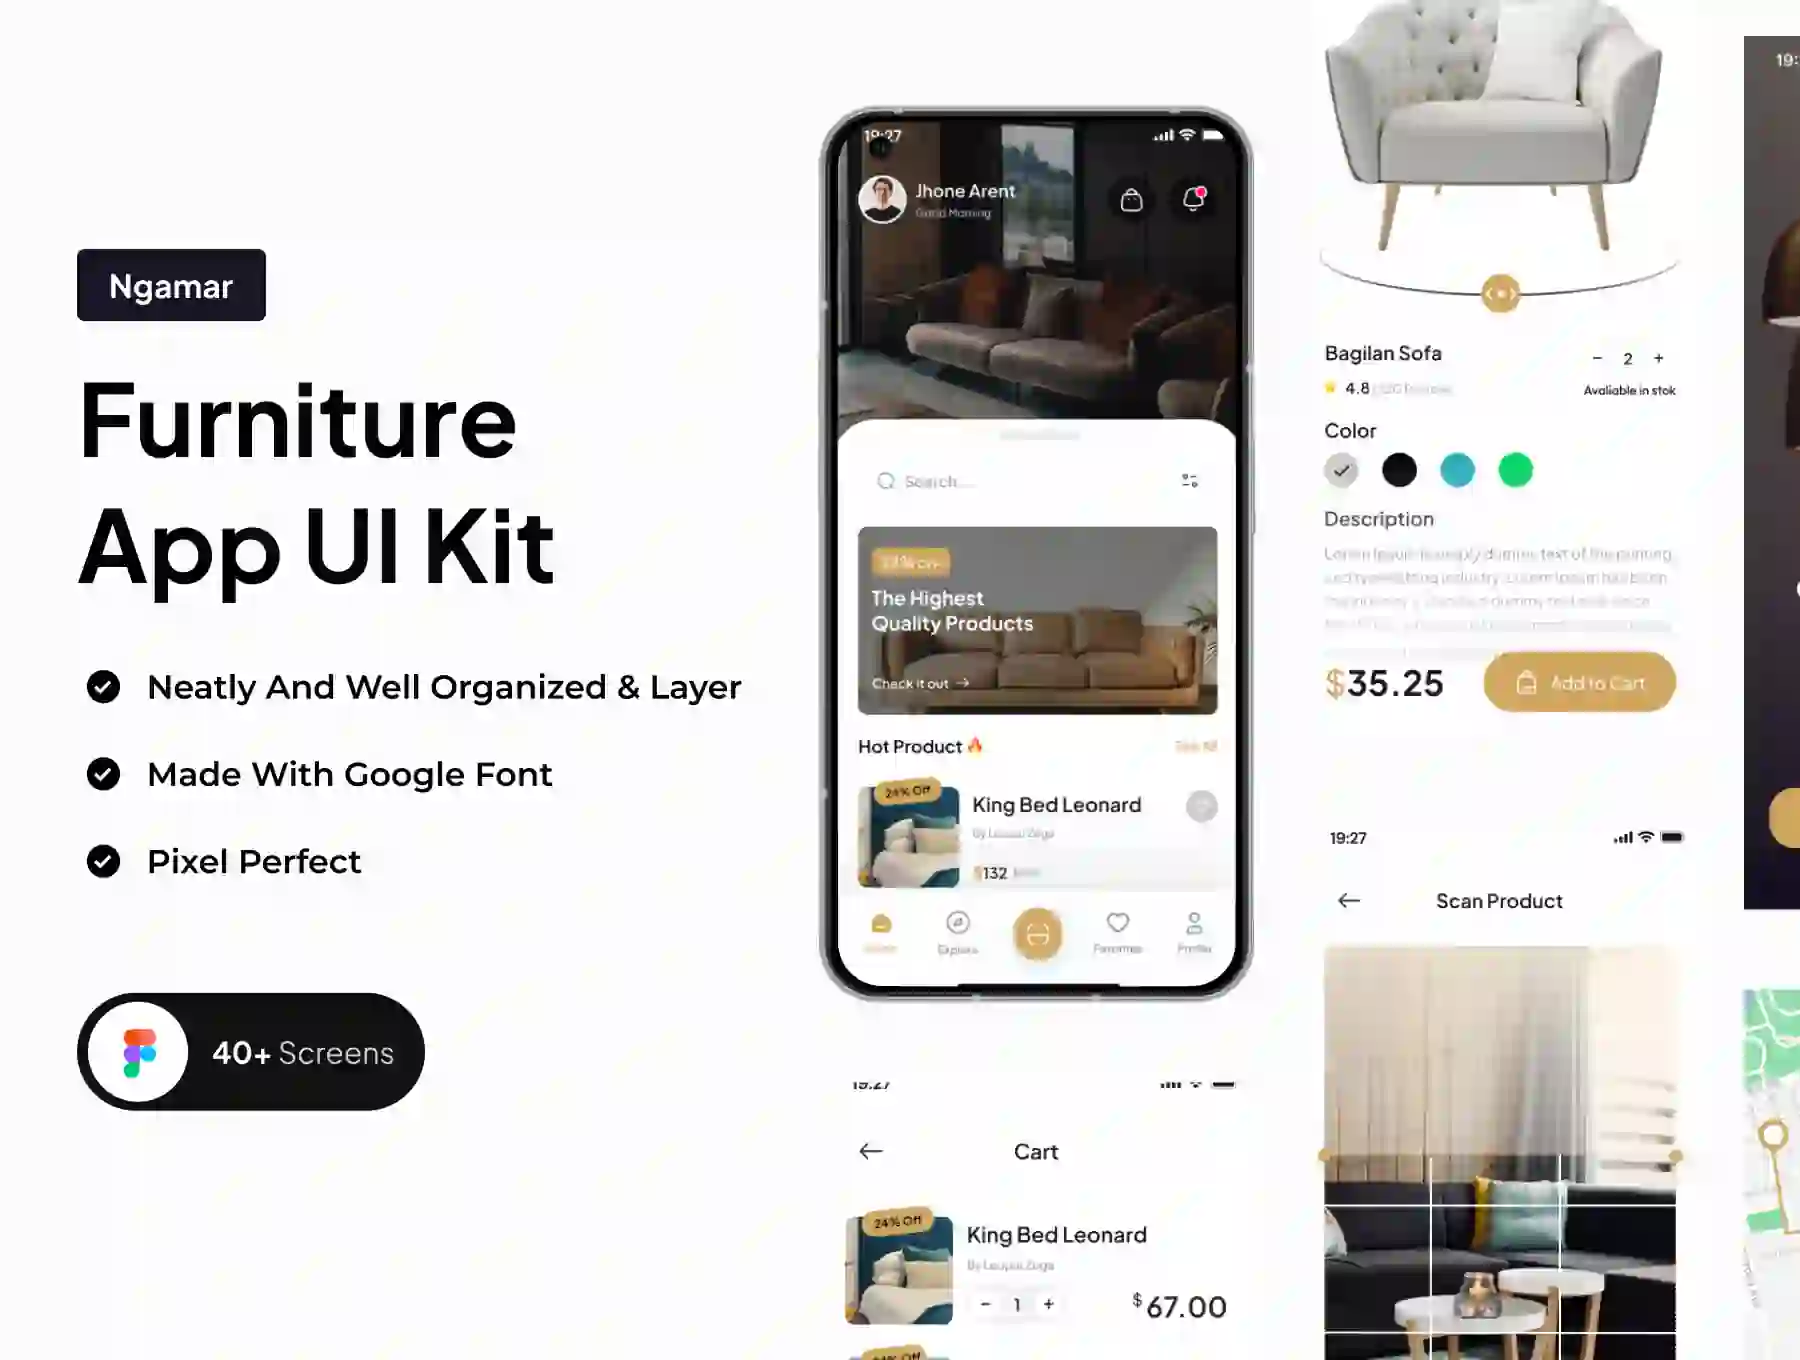 Ngamar - Furniture App UI Kit